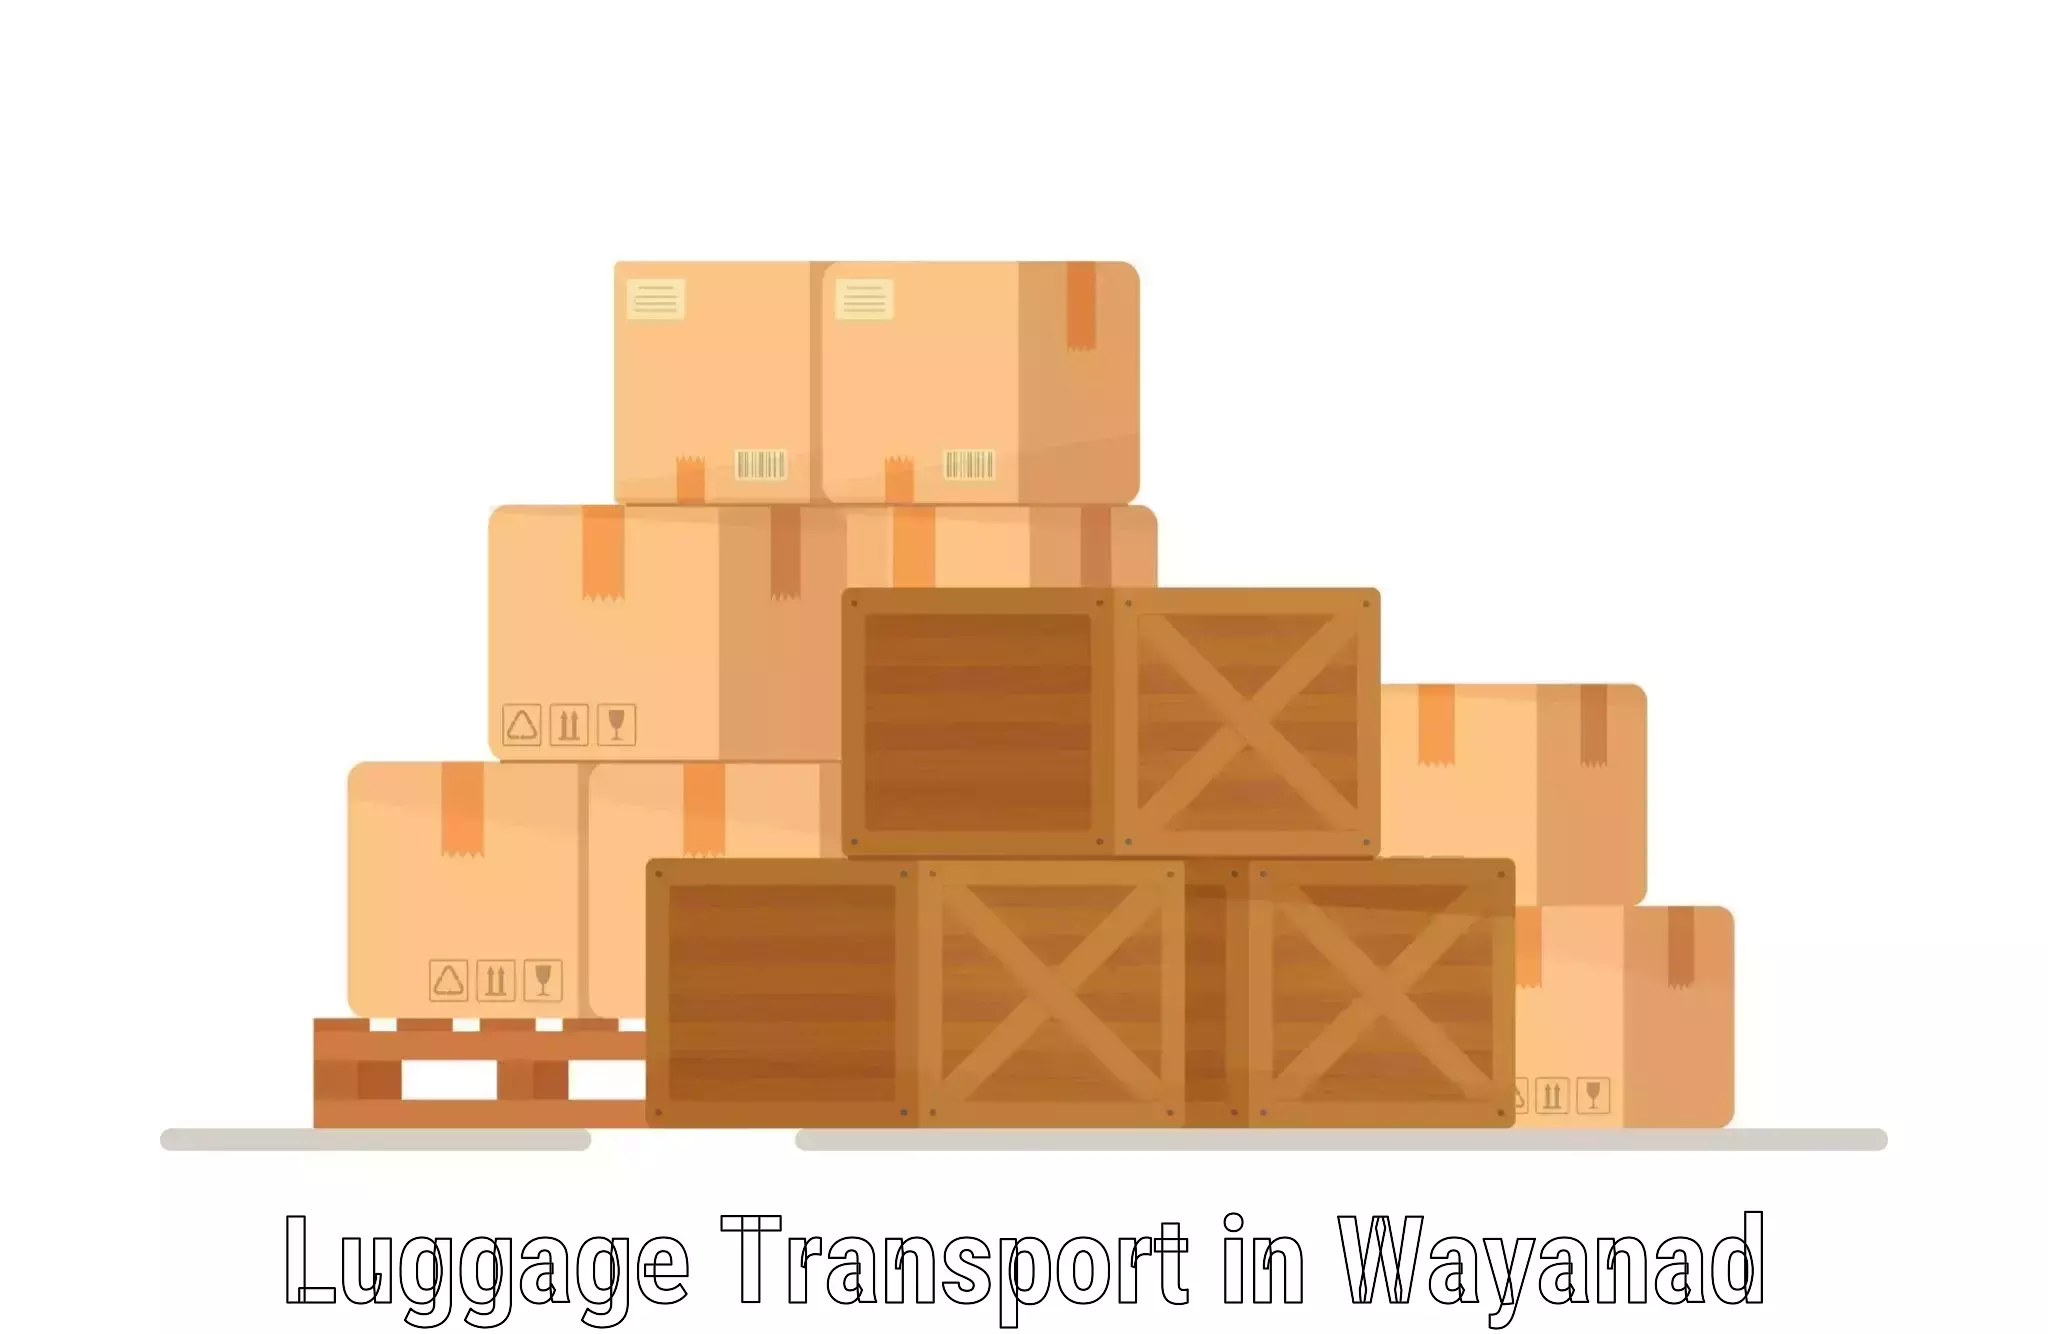 Urgent luggage shipment in Wayanad